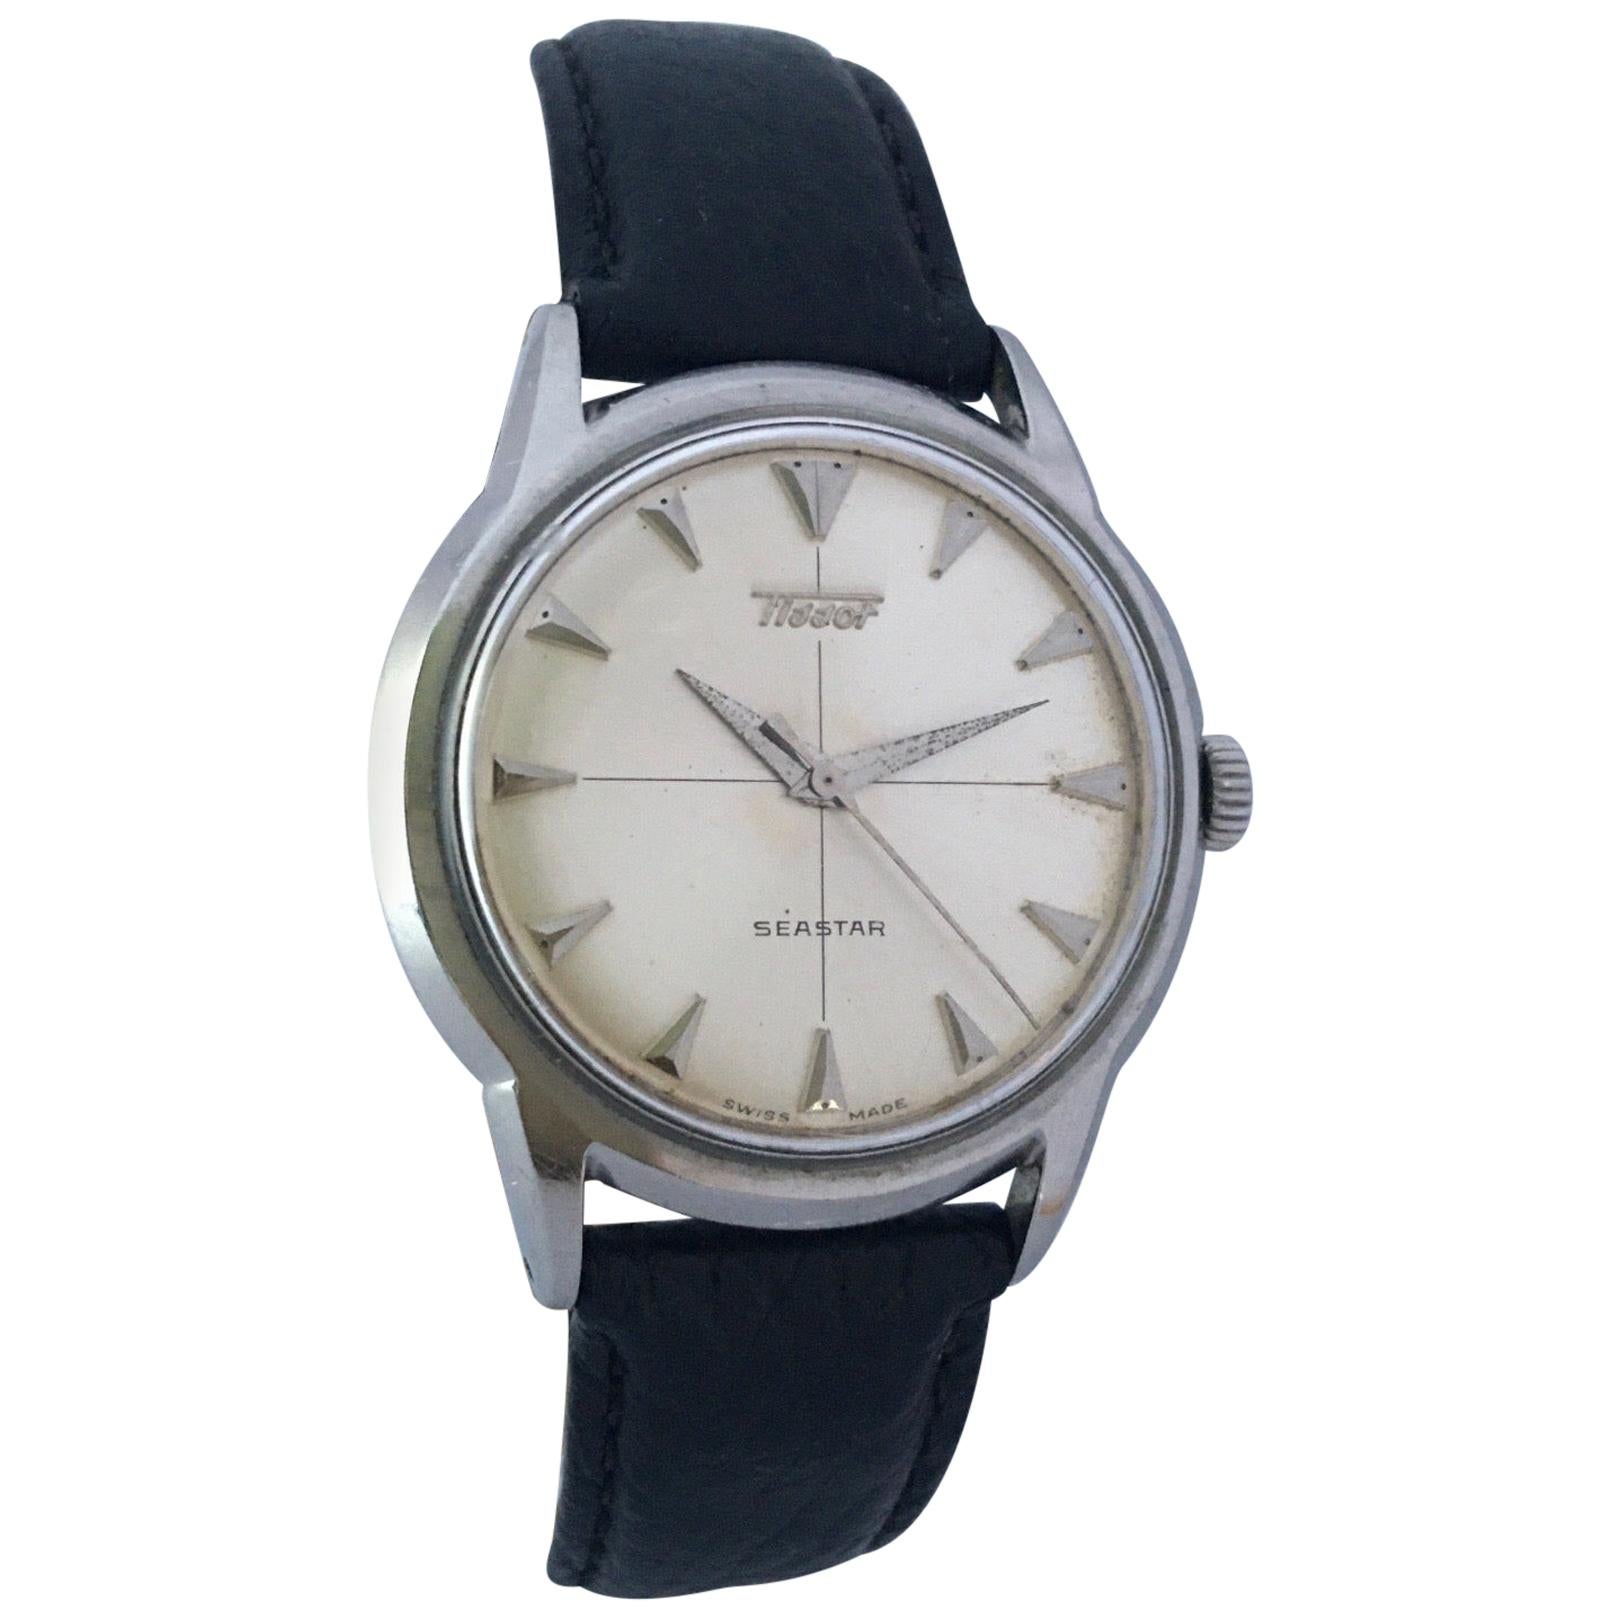 Vintage 1950s Stainless Steel Tissot Seastar Mechanical Wristwatch